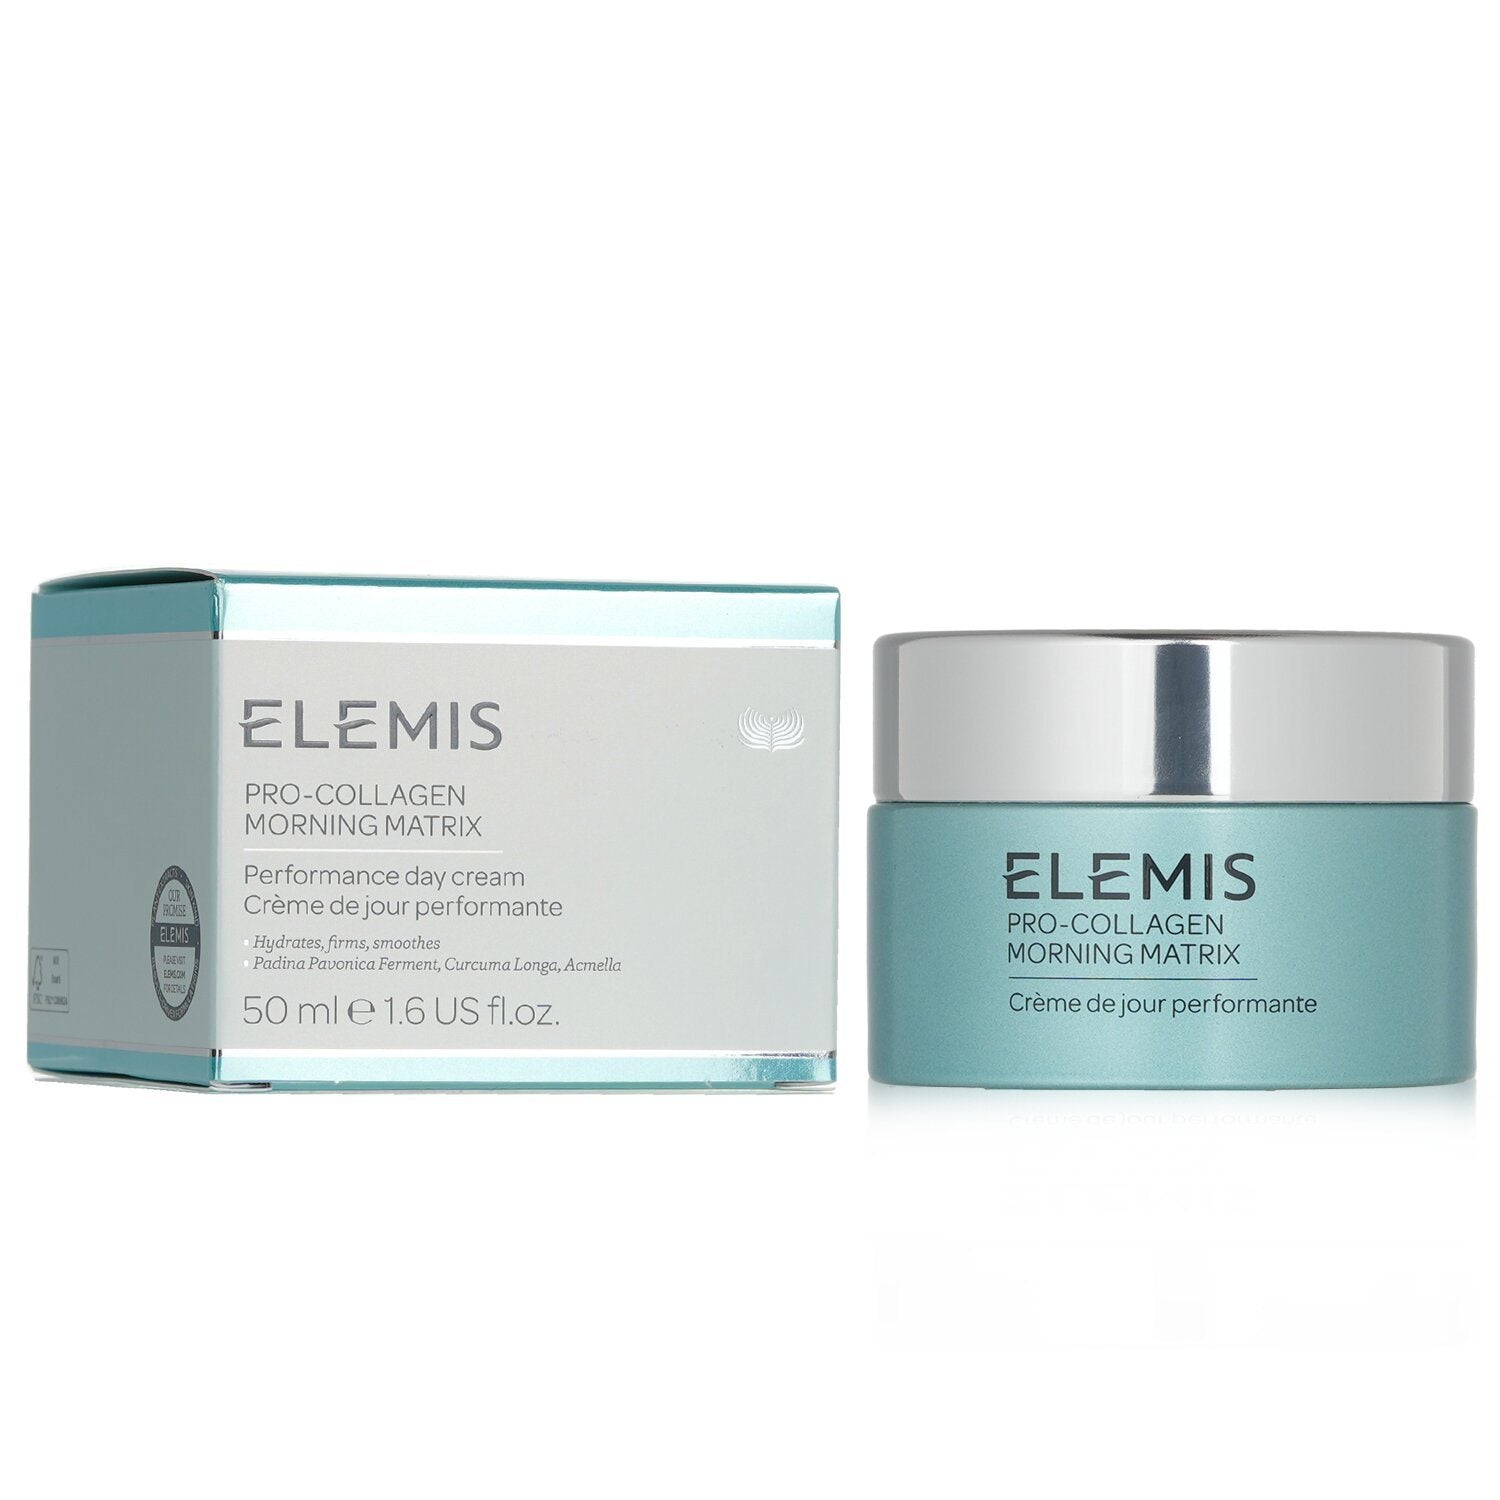 ELEMIS - Pro Collagen Morning Matrix - 50ml/1.6oz 3P's Inclusive Beauty